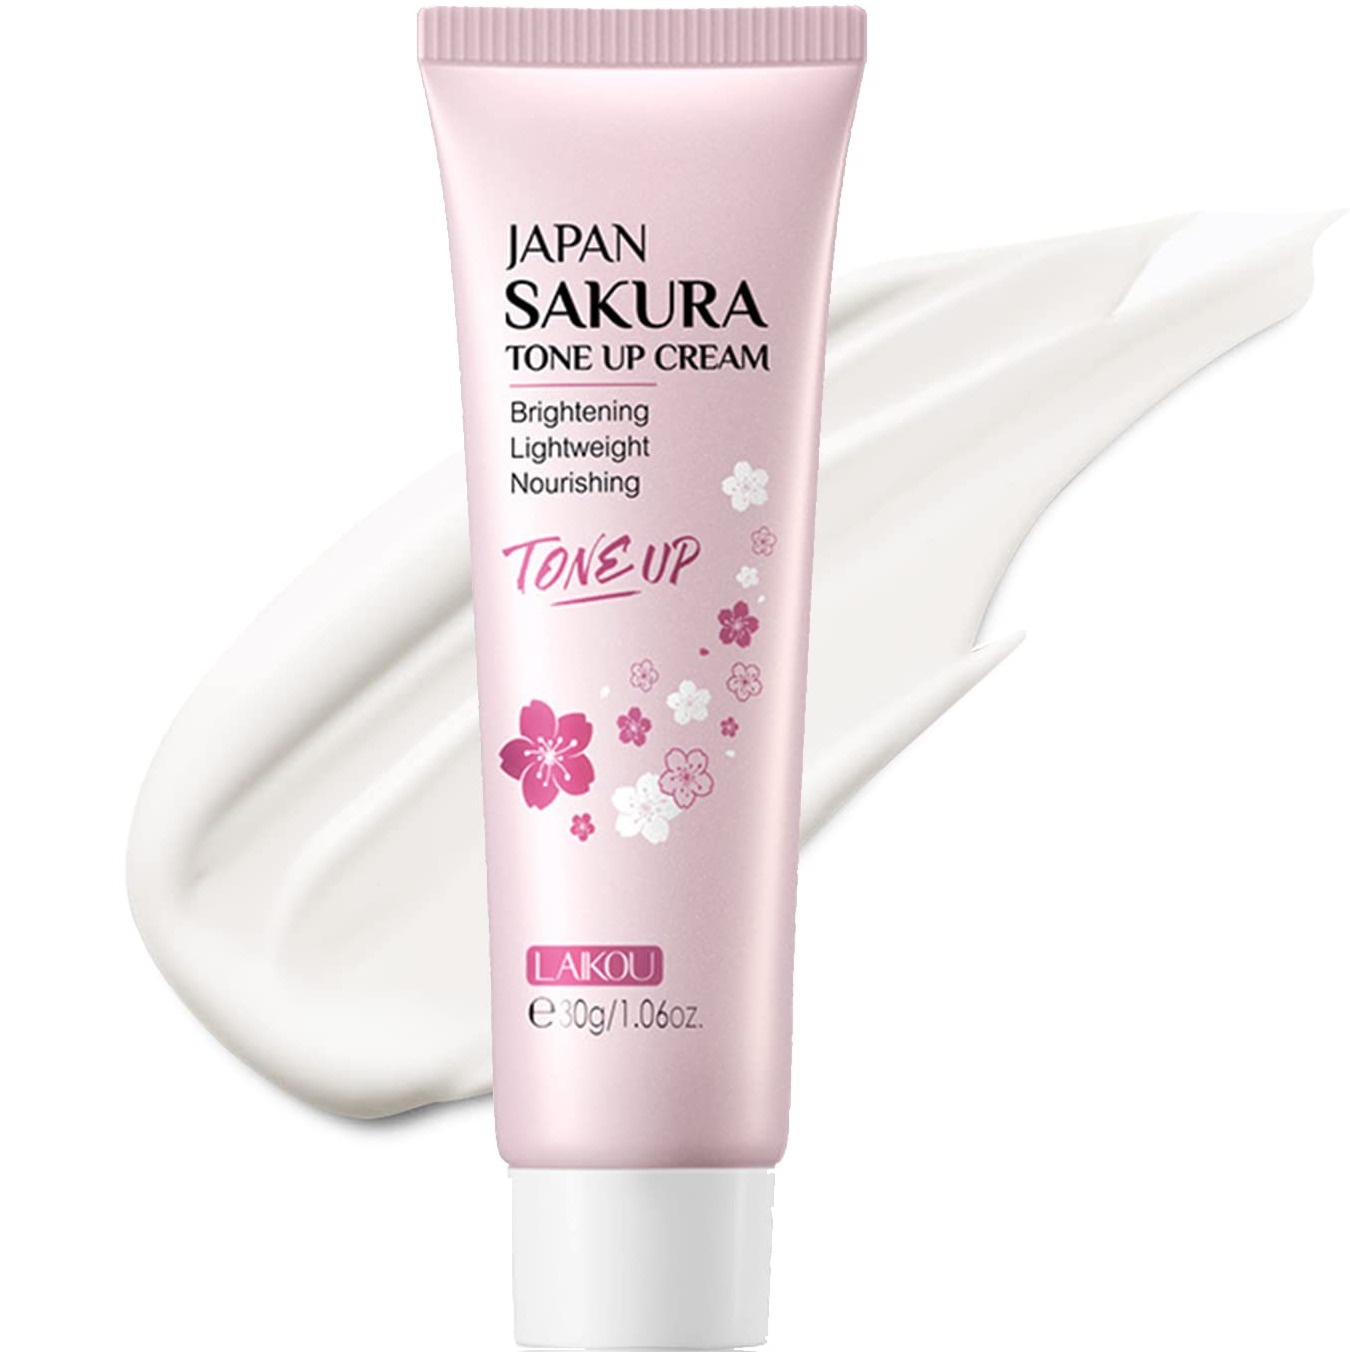 Laikou Japan Sakura Tone Up Cream